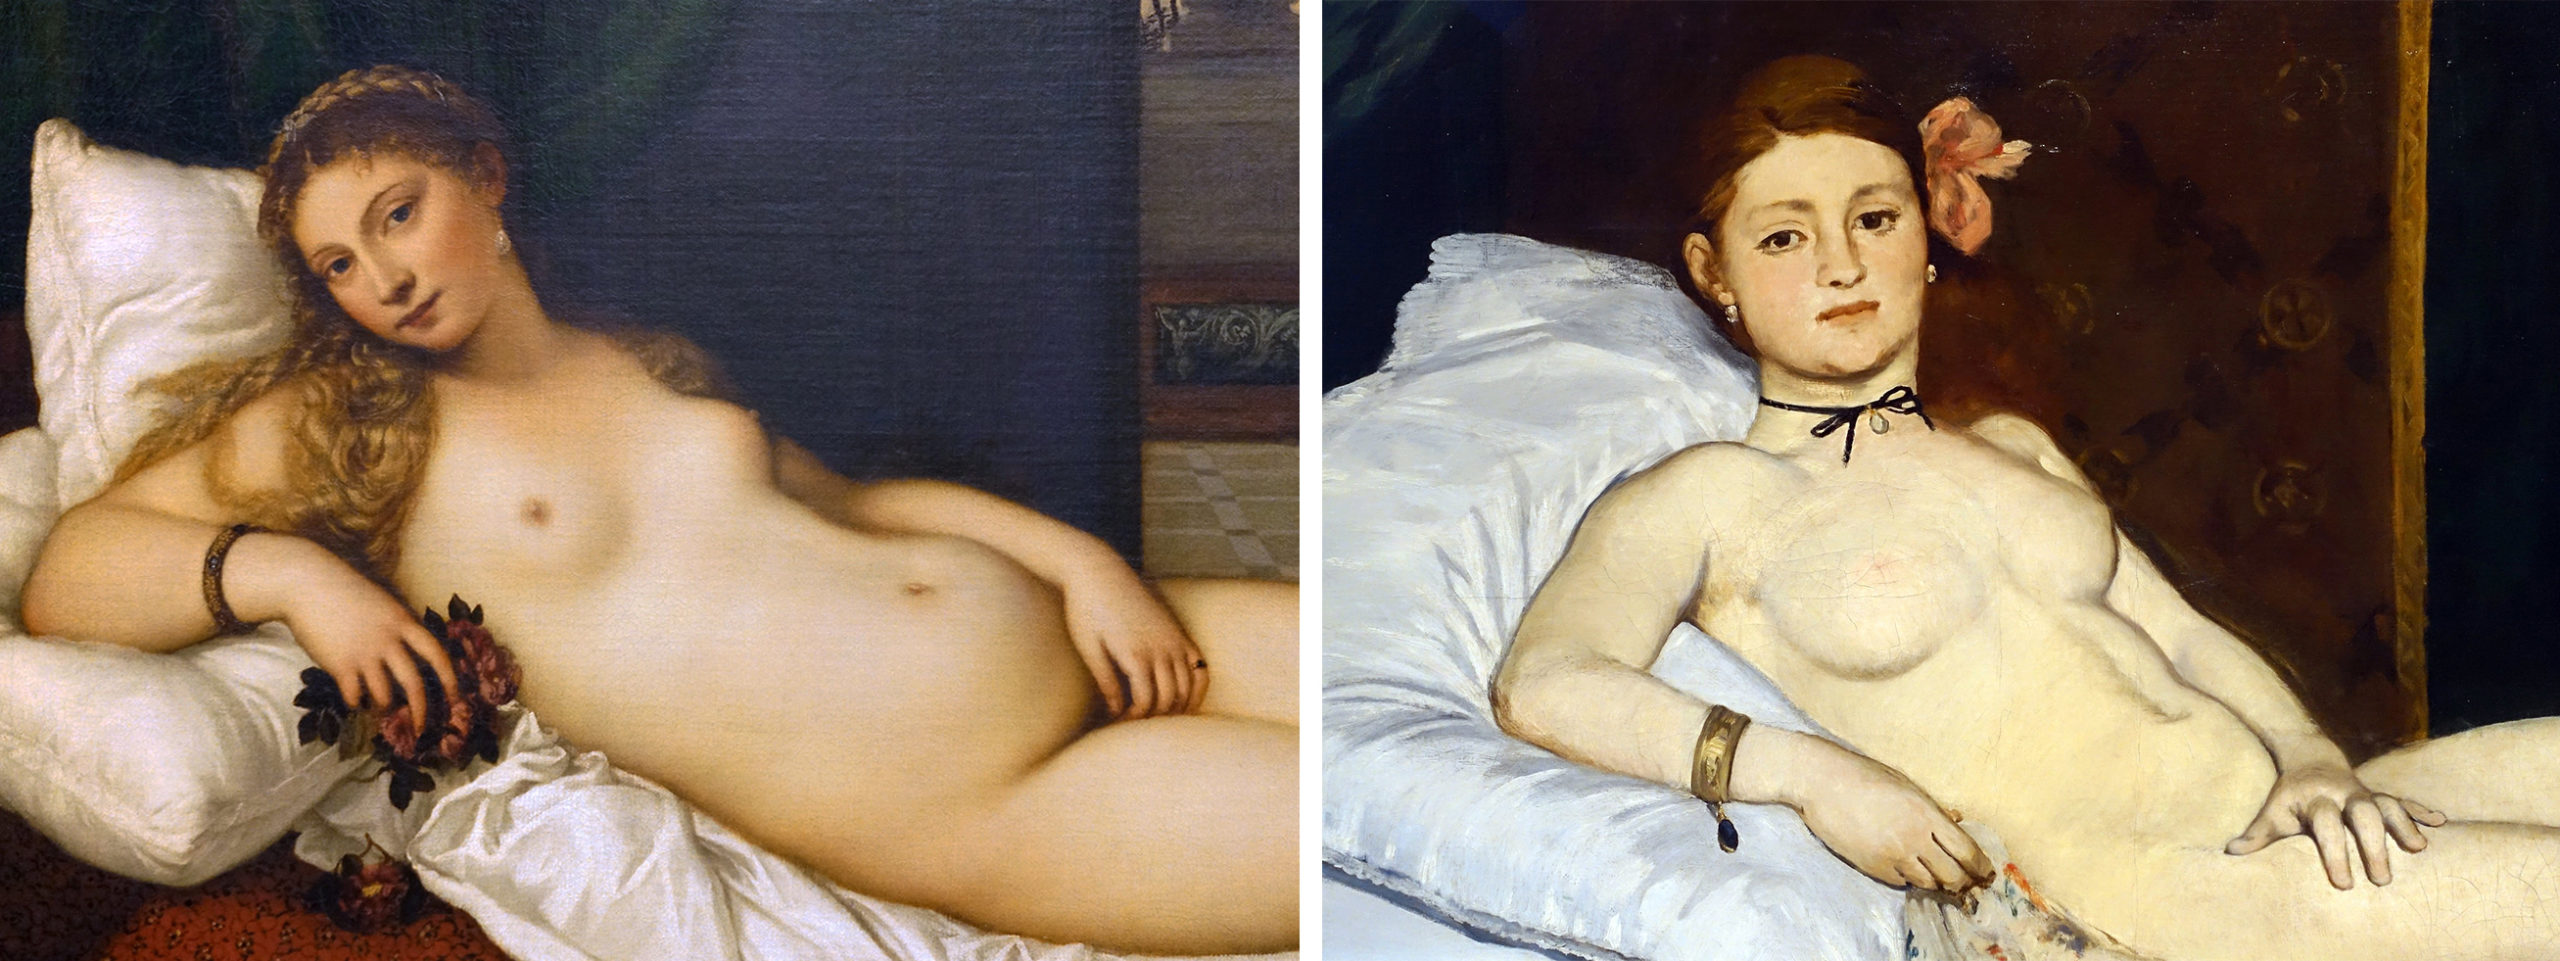 Left: Titian, Venus of Urbino, 1538, oil on canvas, 119.20 x 165.50 cm (Galleria degli Uffizi, Florence; photo: Steven Zucker, CC BY-NC-SA 2.0); right: Édouard Manet, Olympia, 1863, oil on canvas, 130 x 190 cm (Musée d'Orsay, Paris; photo: Steven Zucker, CC BY-NC-SA 2.0)